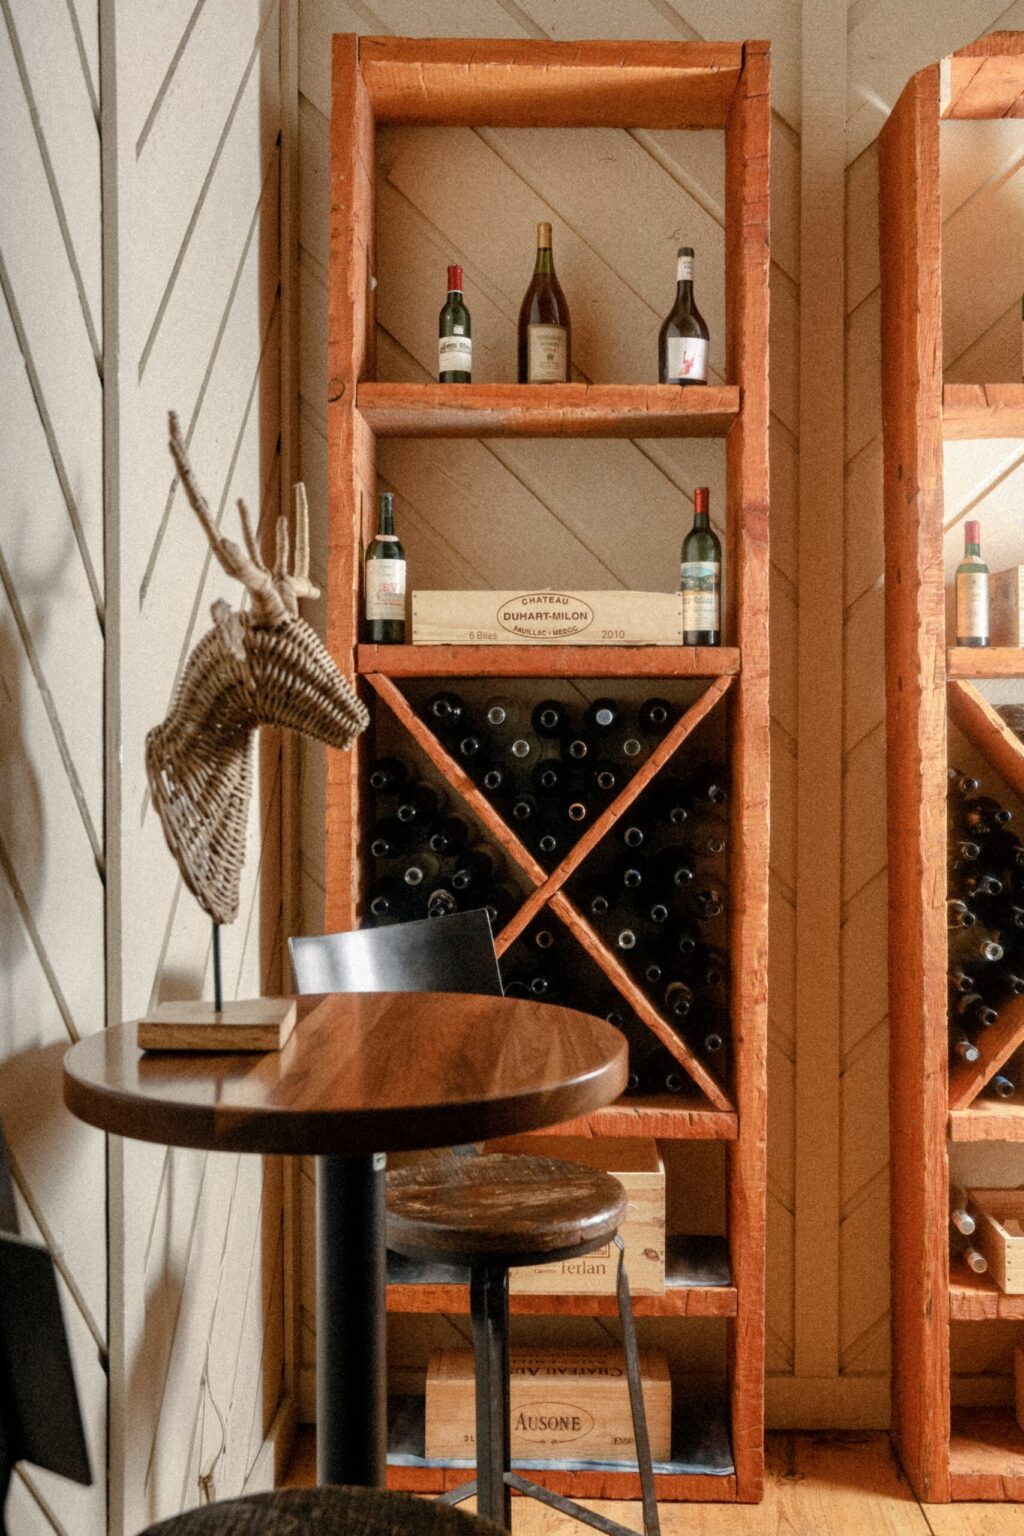 Designer cupboard embellished with various types of wine bottles.